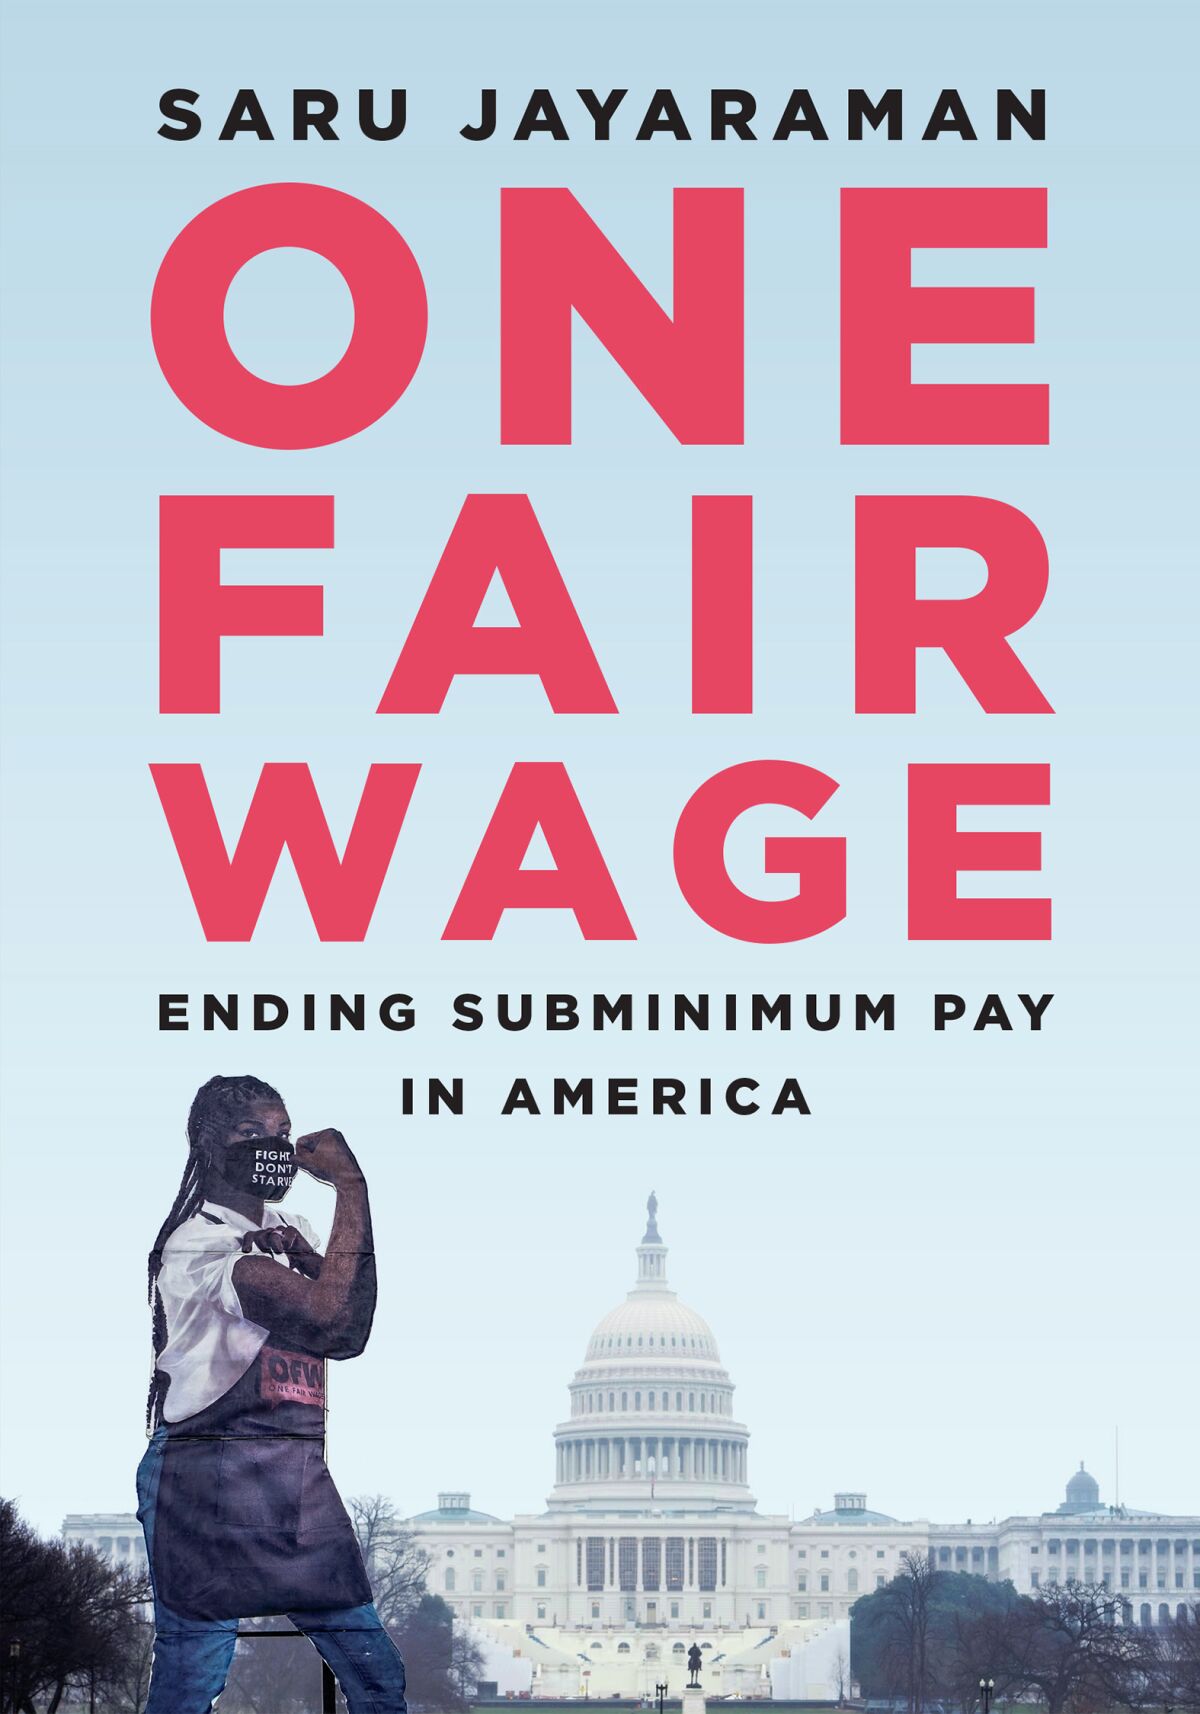 "One Fair Wage" by Saru Jayaraman.